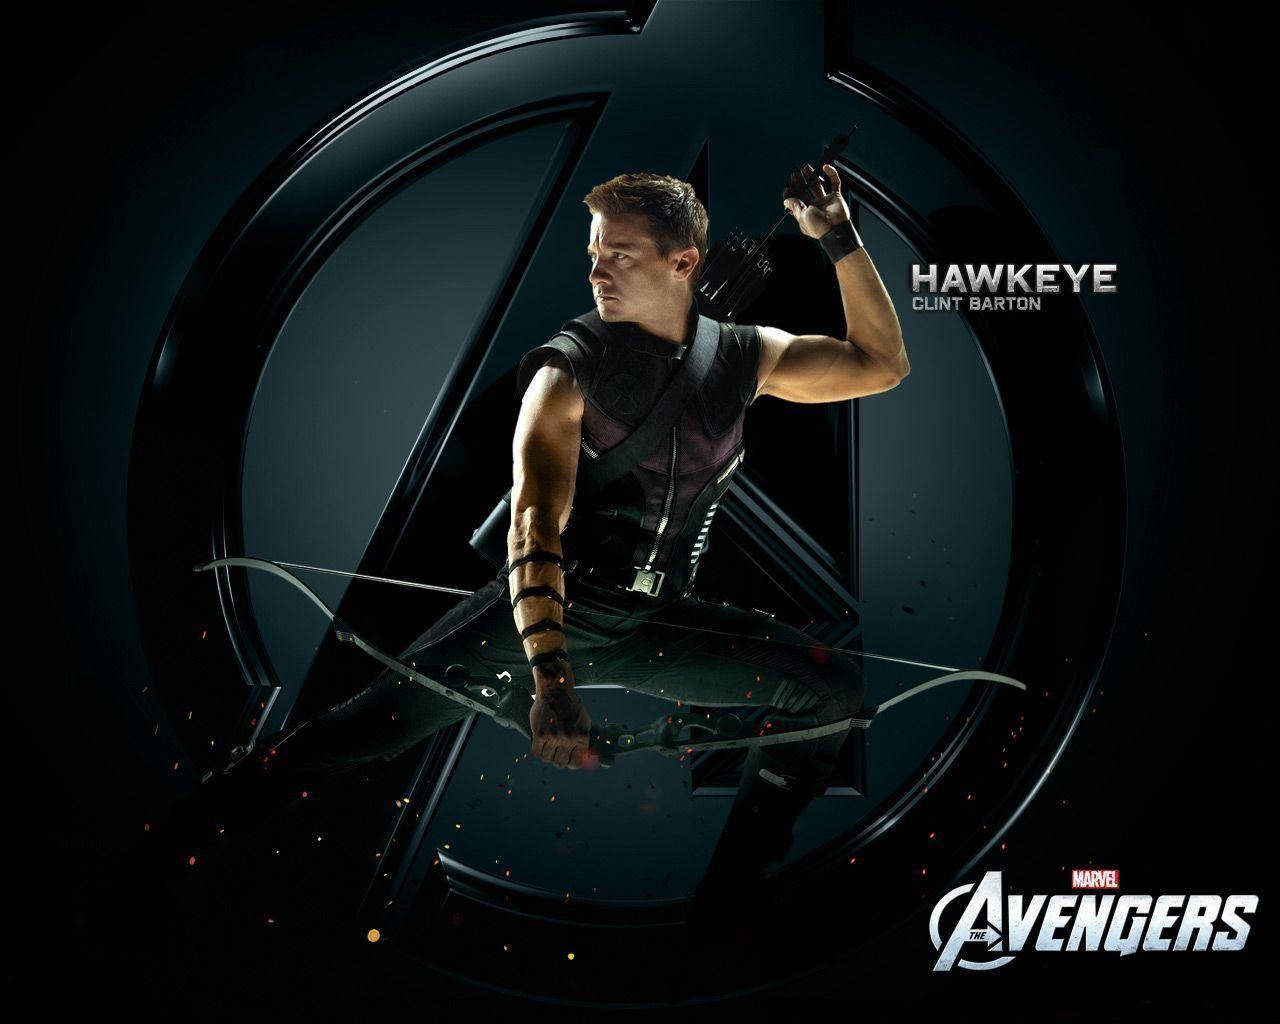 Avengers Hawkeye Clint Barton Wallpaper